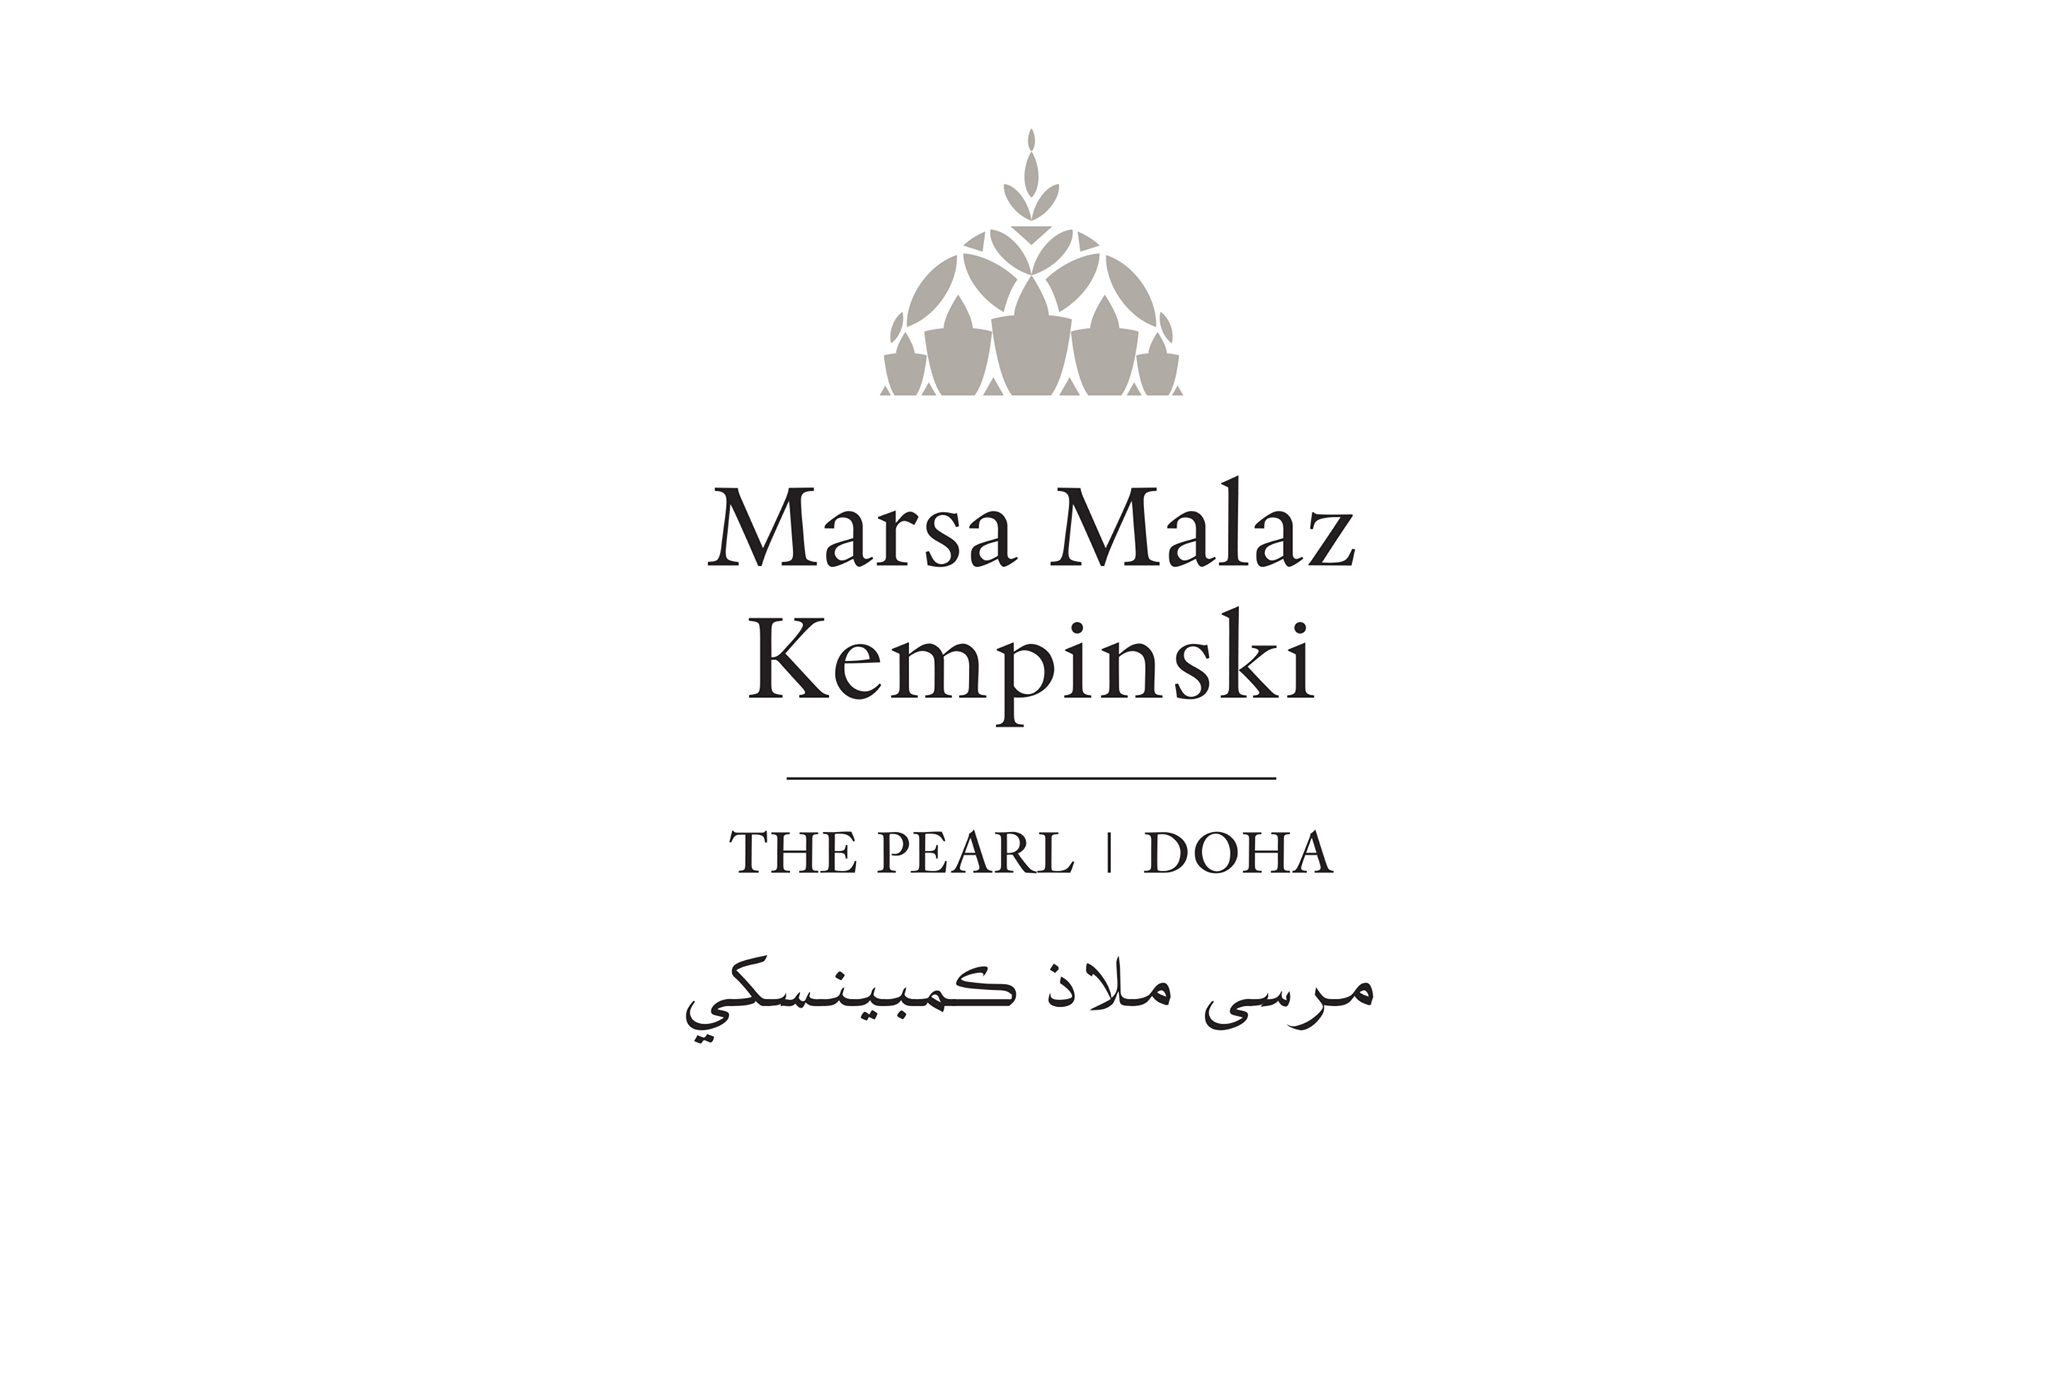 MARSA MALAZ KEMPINSKI, THE PEARL – DOHA